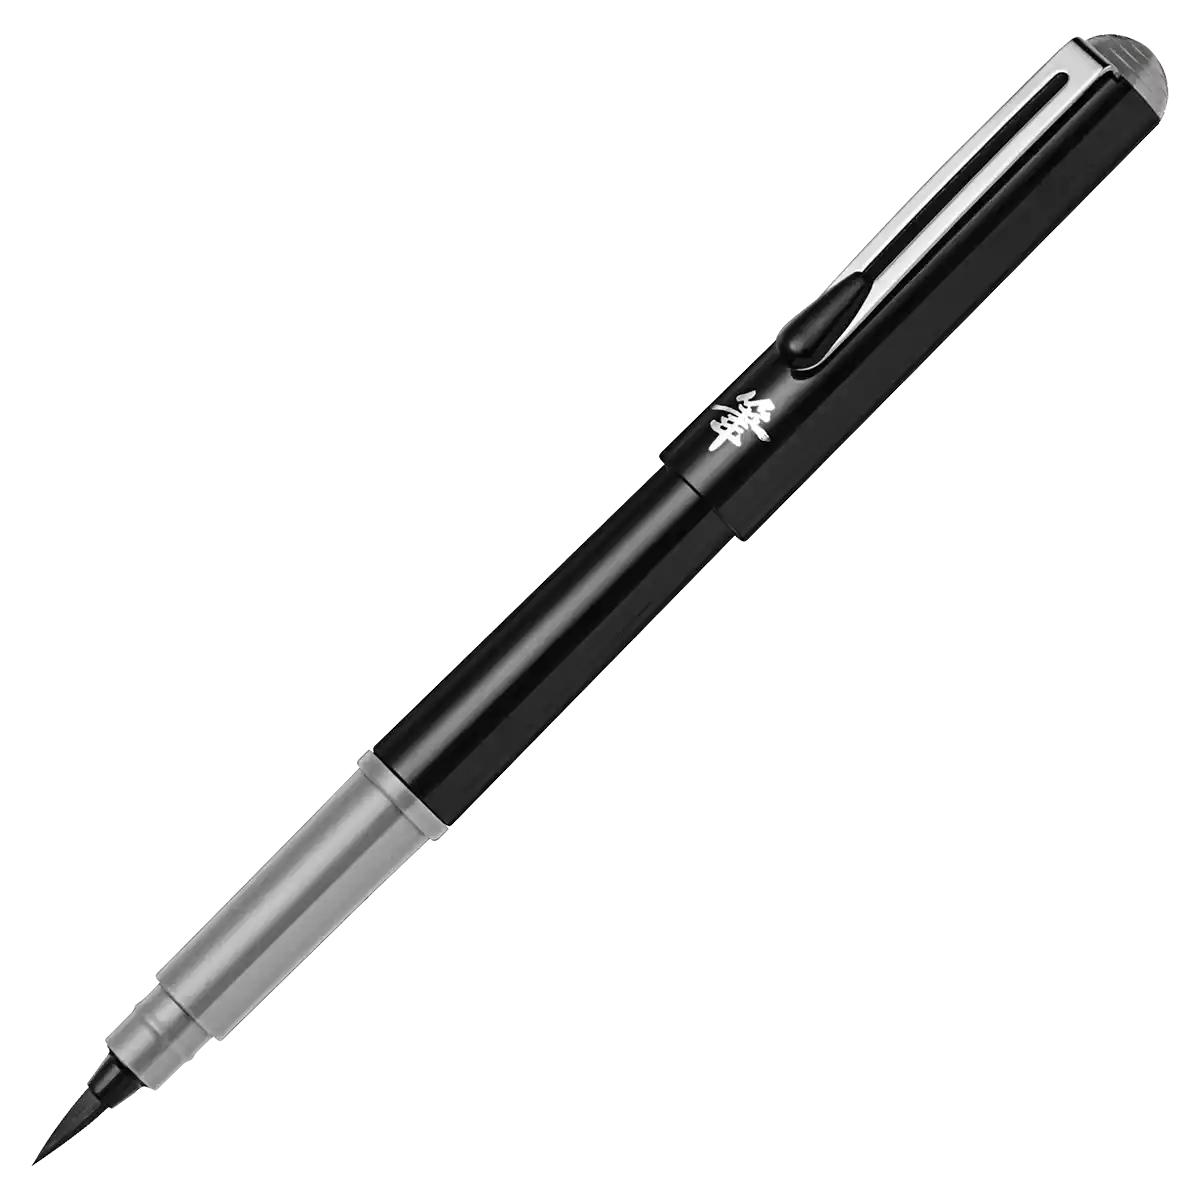 Pentel / Pocket Brush Pen / Brush Pen / Pinselstift / GFKP3-NO